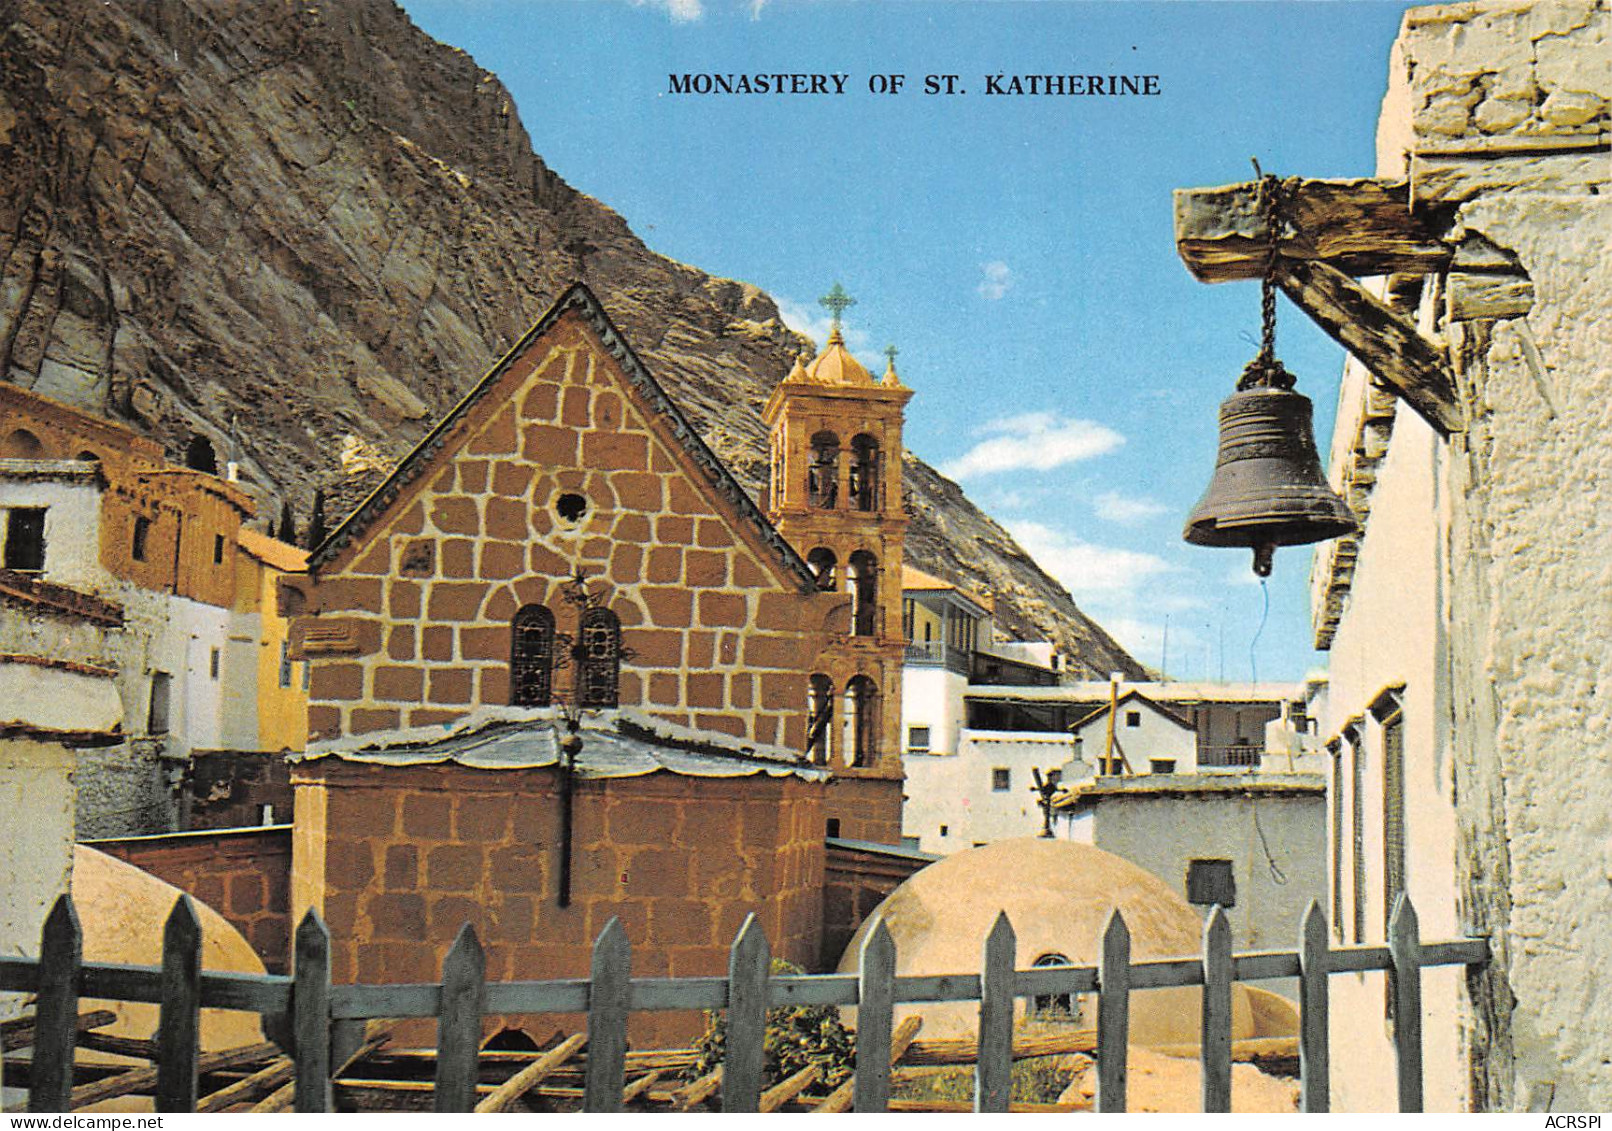  Israël ISRAEL Monastery Of Ste Catherine Orthodoxe  N°85 \ MK3030   ישר�?ל. בית לח�? - Israel